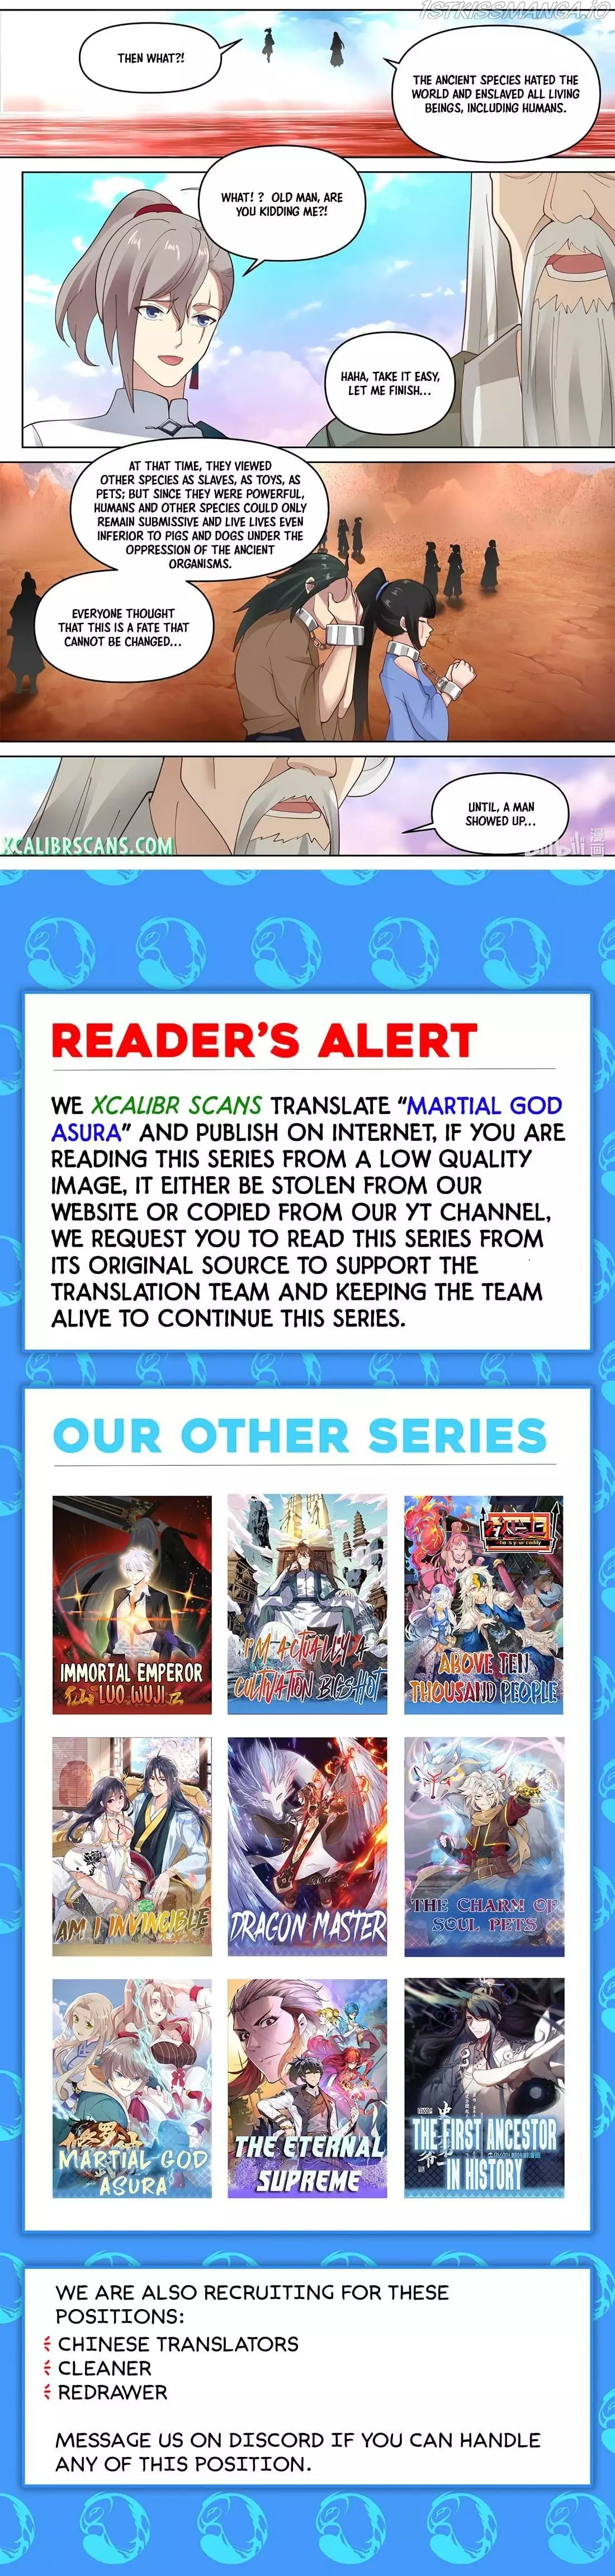 Martial God Asura - 441 page 10-9a908d3e